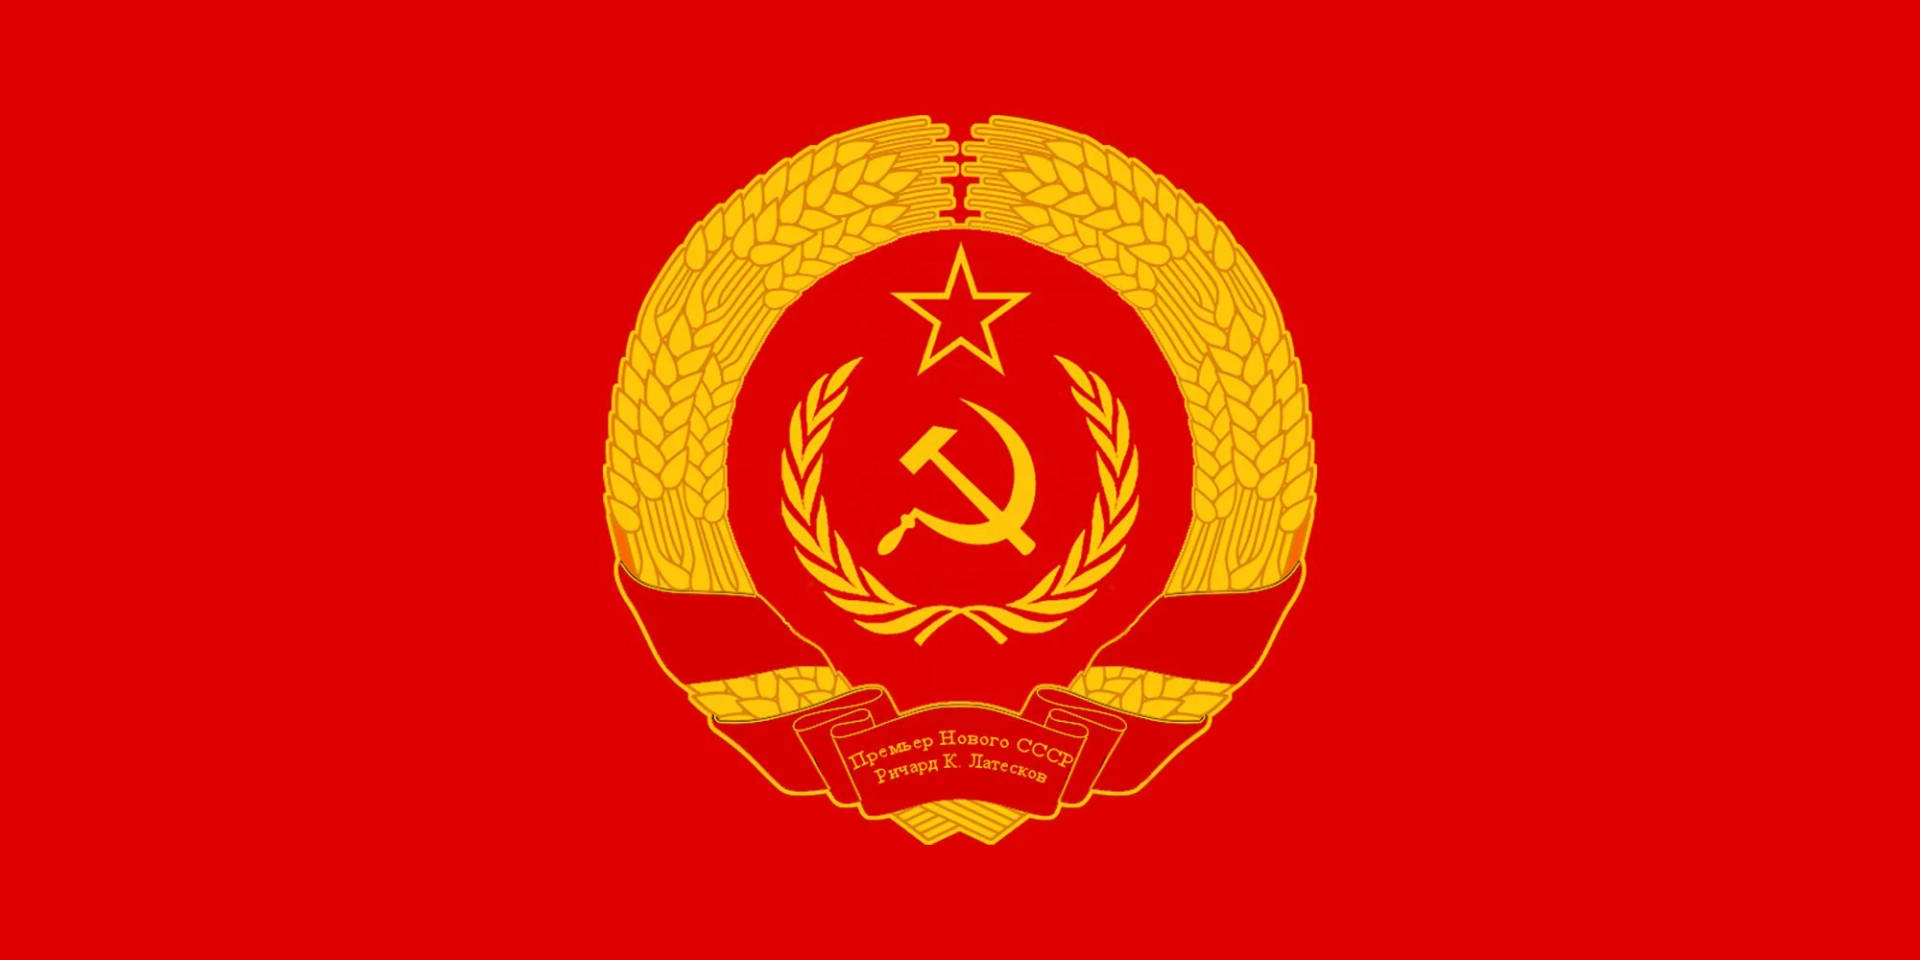 Sowjetunionflagge In Kreisförmigem Logo Wallpaper